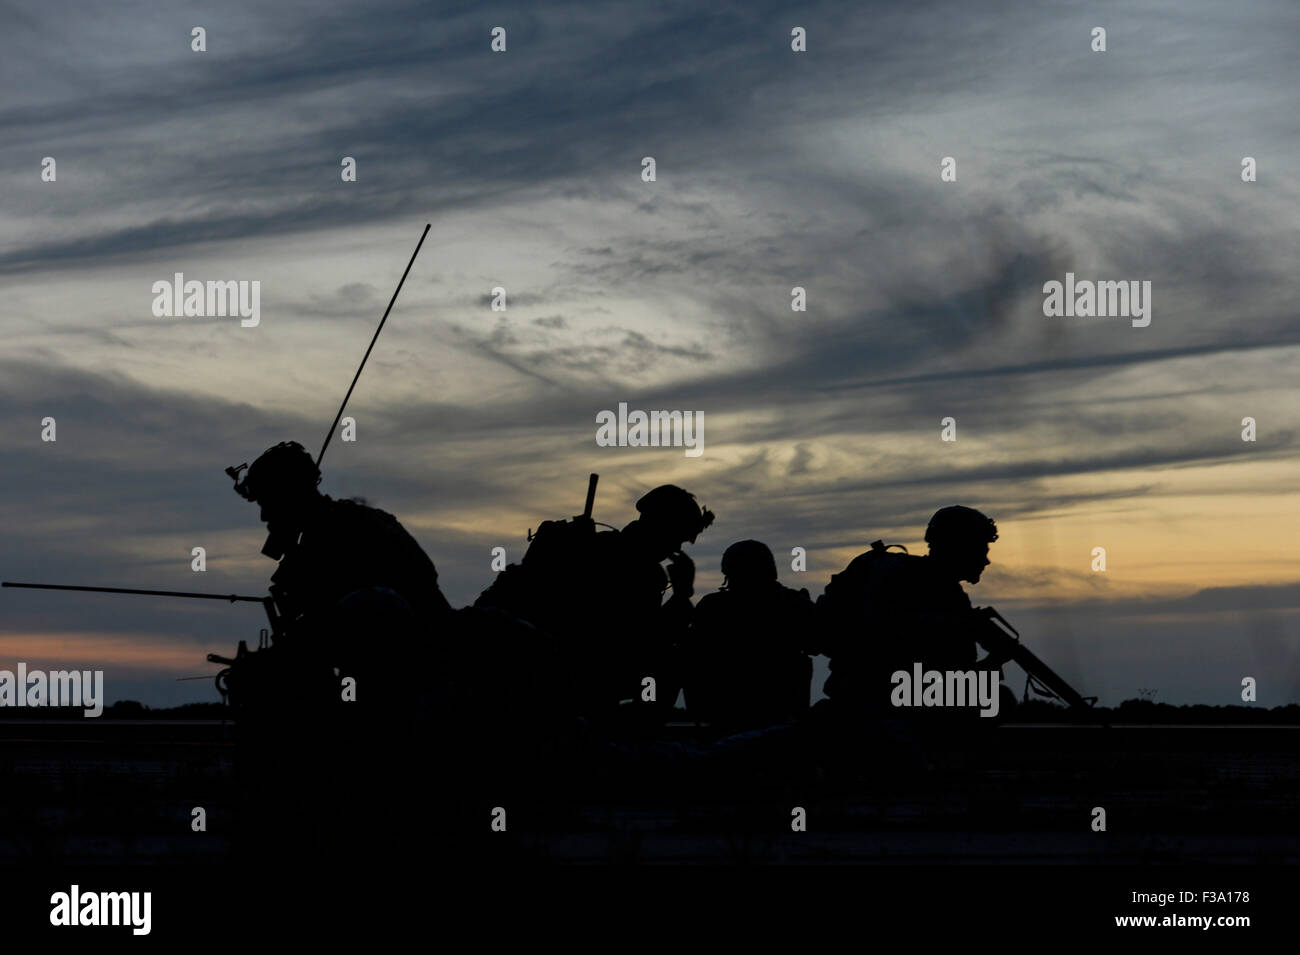 Abril 22, 2015 - U.S. Marine Corps controladores de tráfico aéreo con el aire marino Escuadrón de Control del Tráfico Aéreo del Ejército y 1 controlle Foto de stock